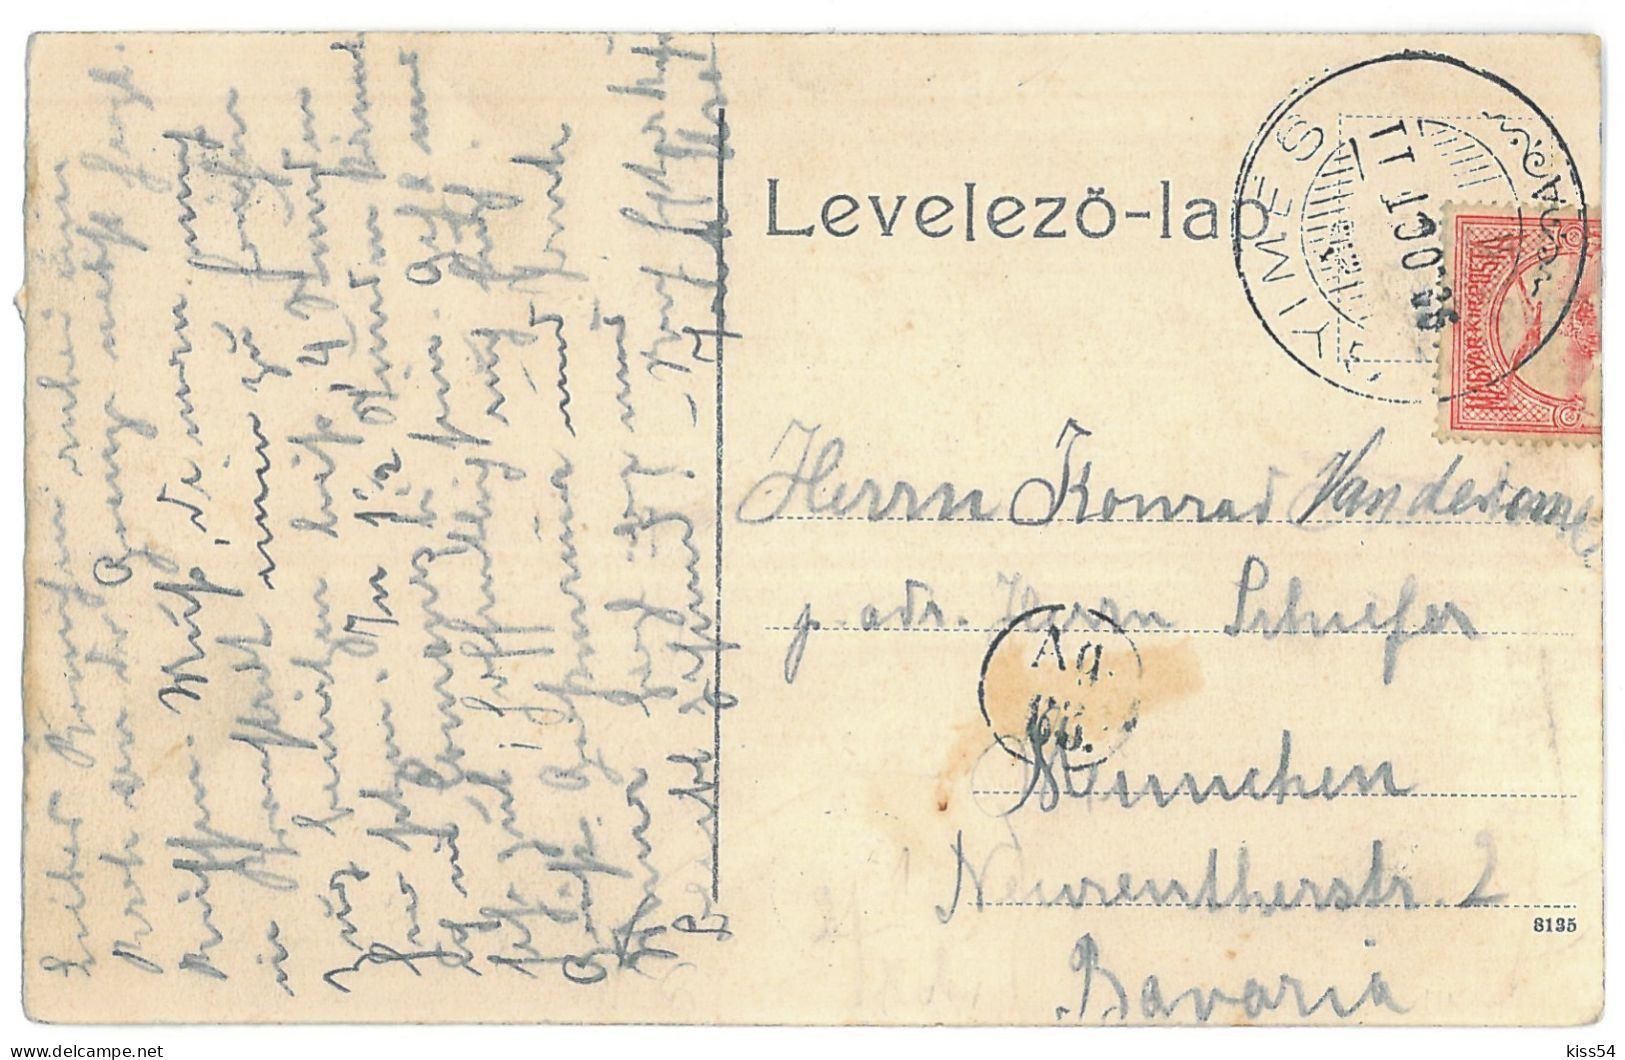 RO 97 - 14126 GHIMES, Bacau, Railways, Romania - Old Postcard - Used - 1909 - Romania